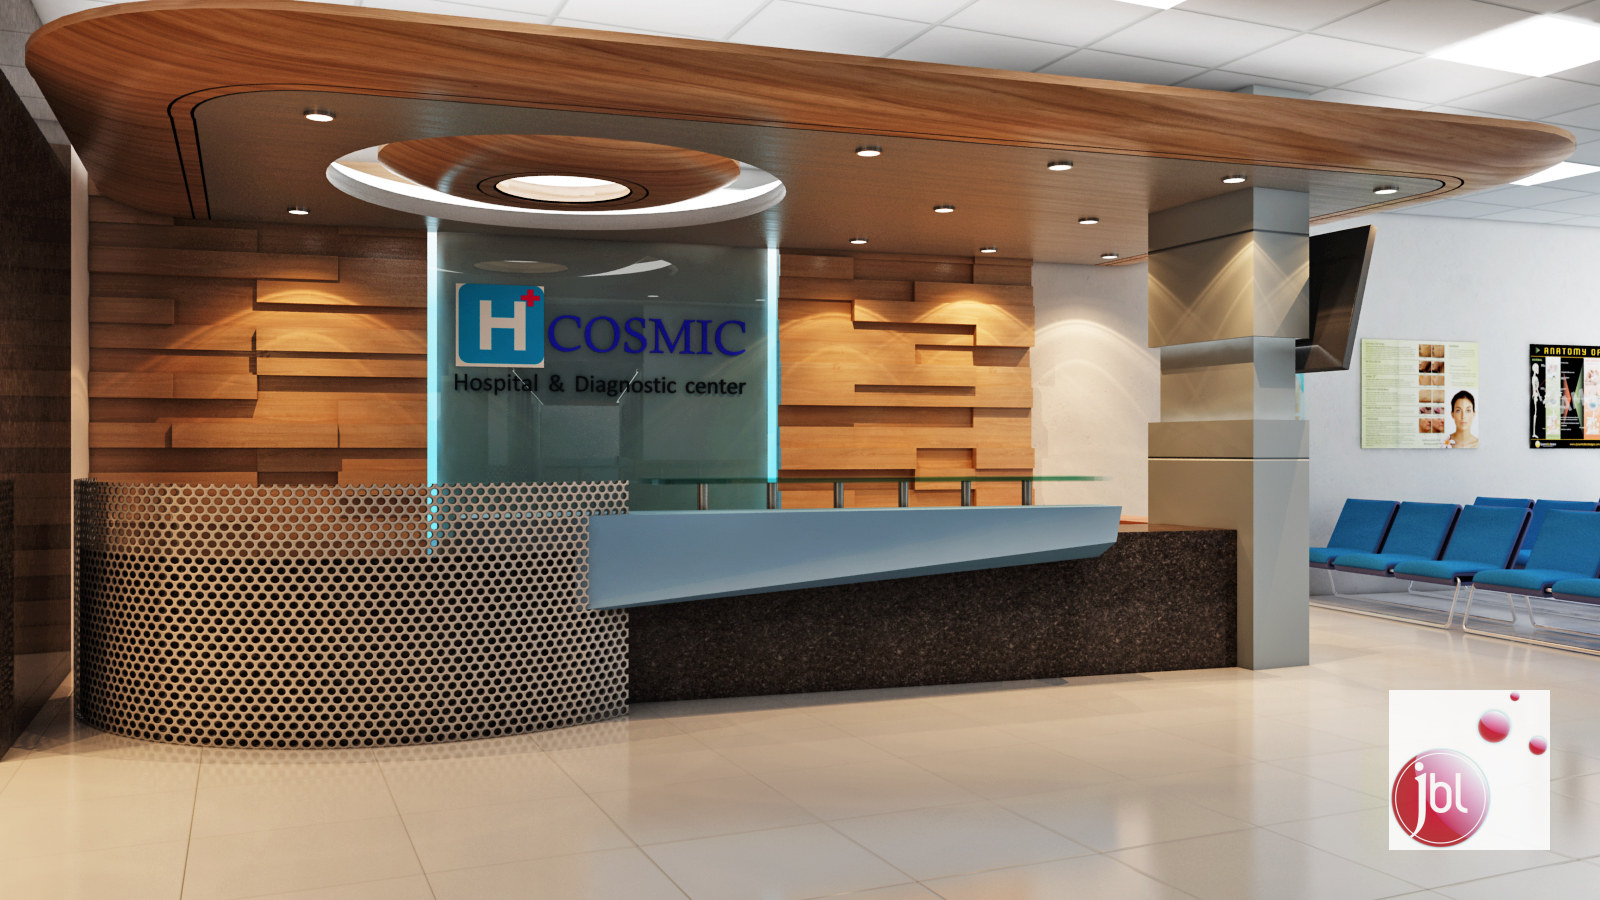 Cosmic Diagnostic Center & Hospital